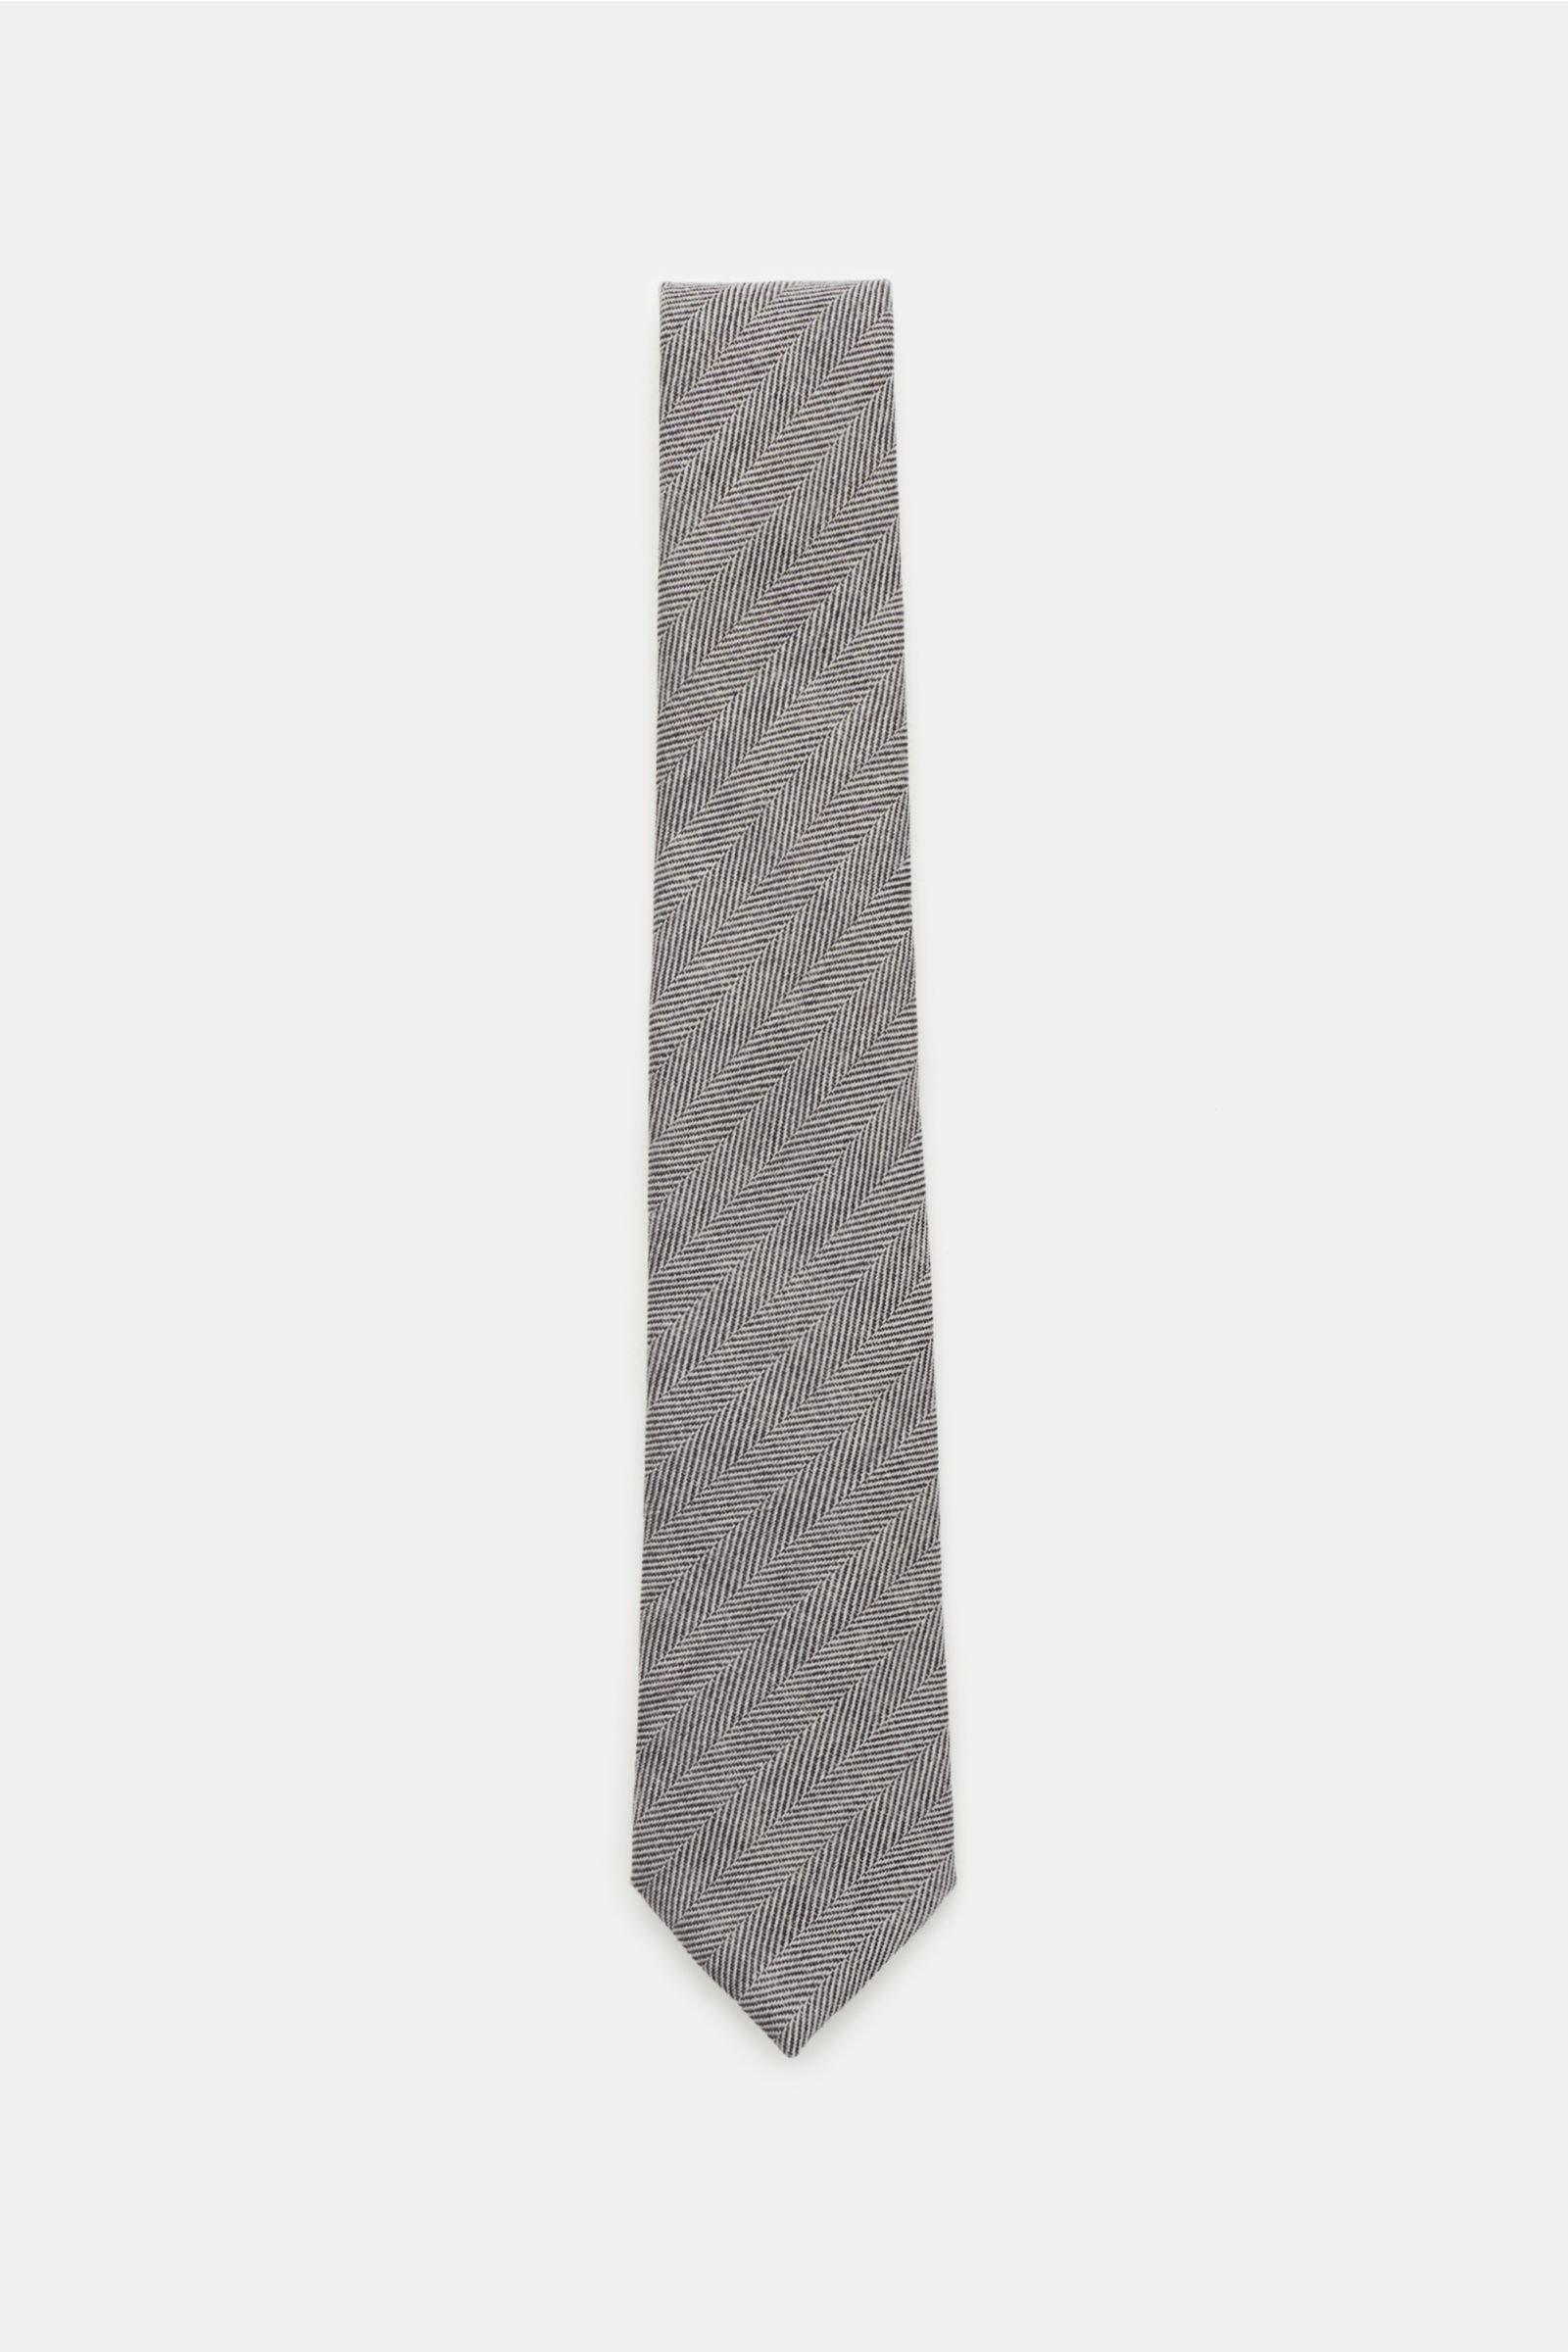 Tie grey patterned